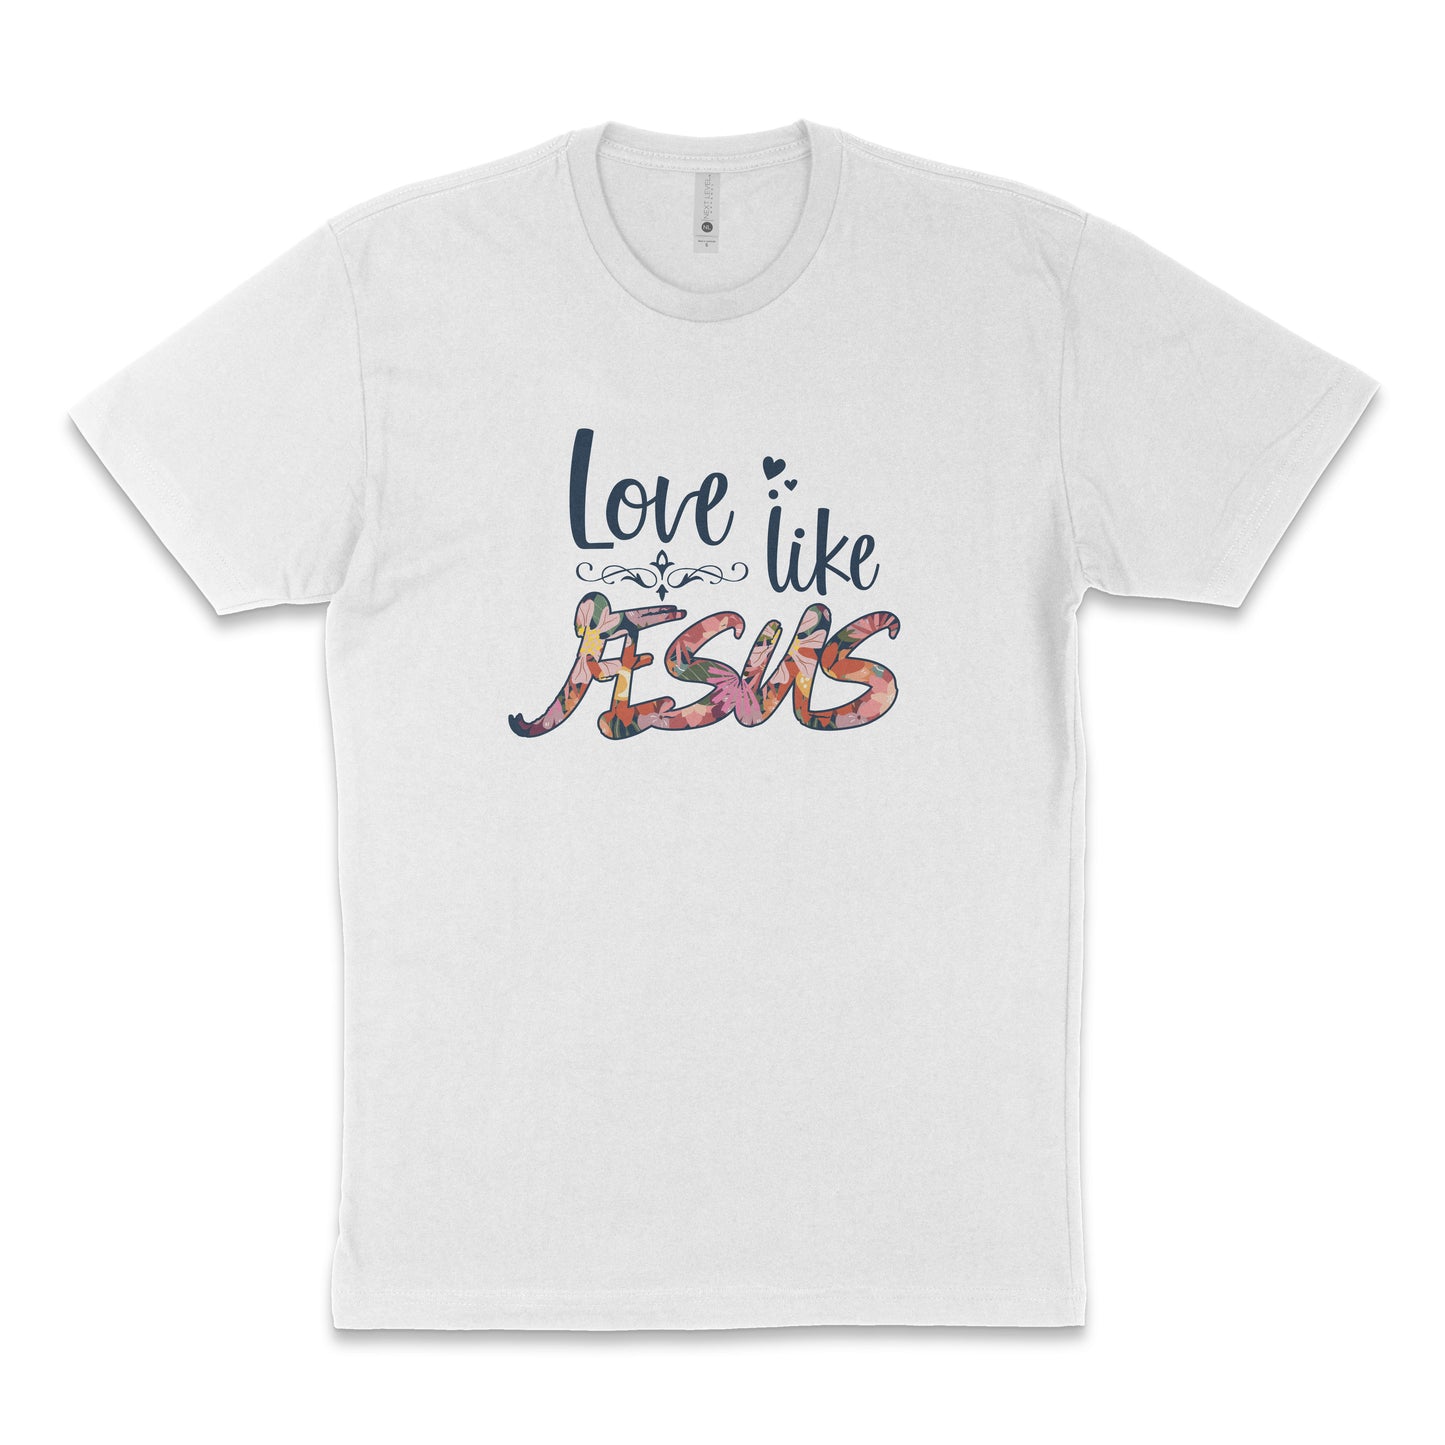 Love like Jesus Graphic T-Shirt